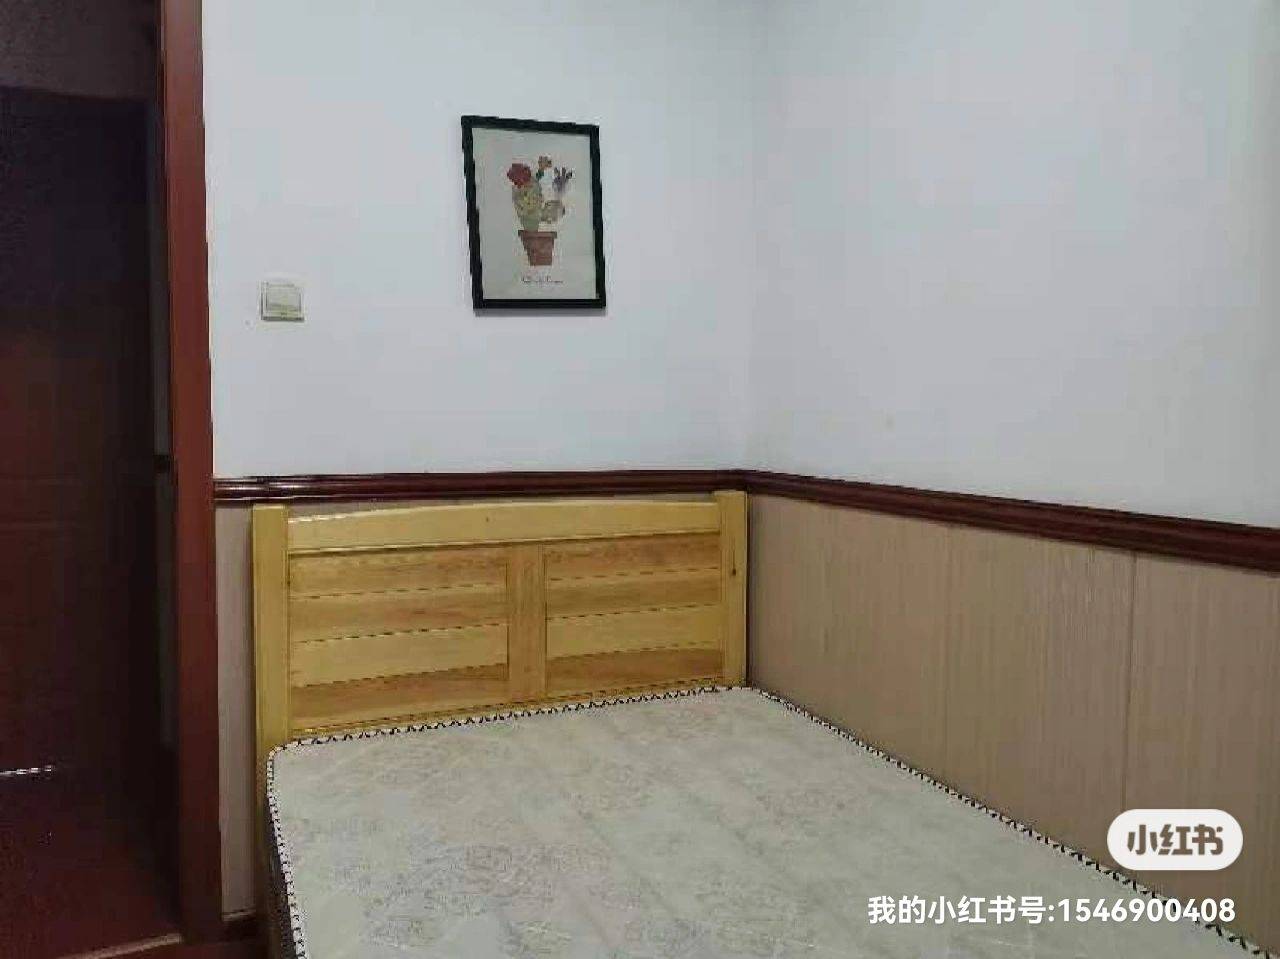 Hangzhou-Xiaoshan-Cozy Home,Clean&Comfy,No Gender Limit,Chilled,LGBTQ Friendly